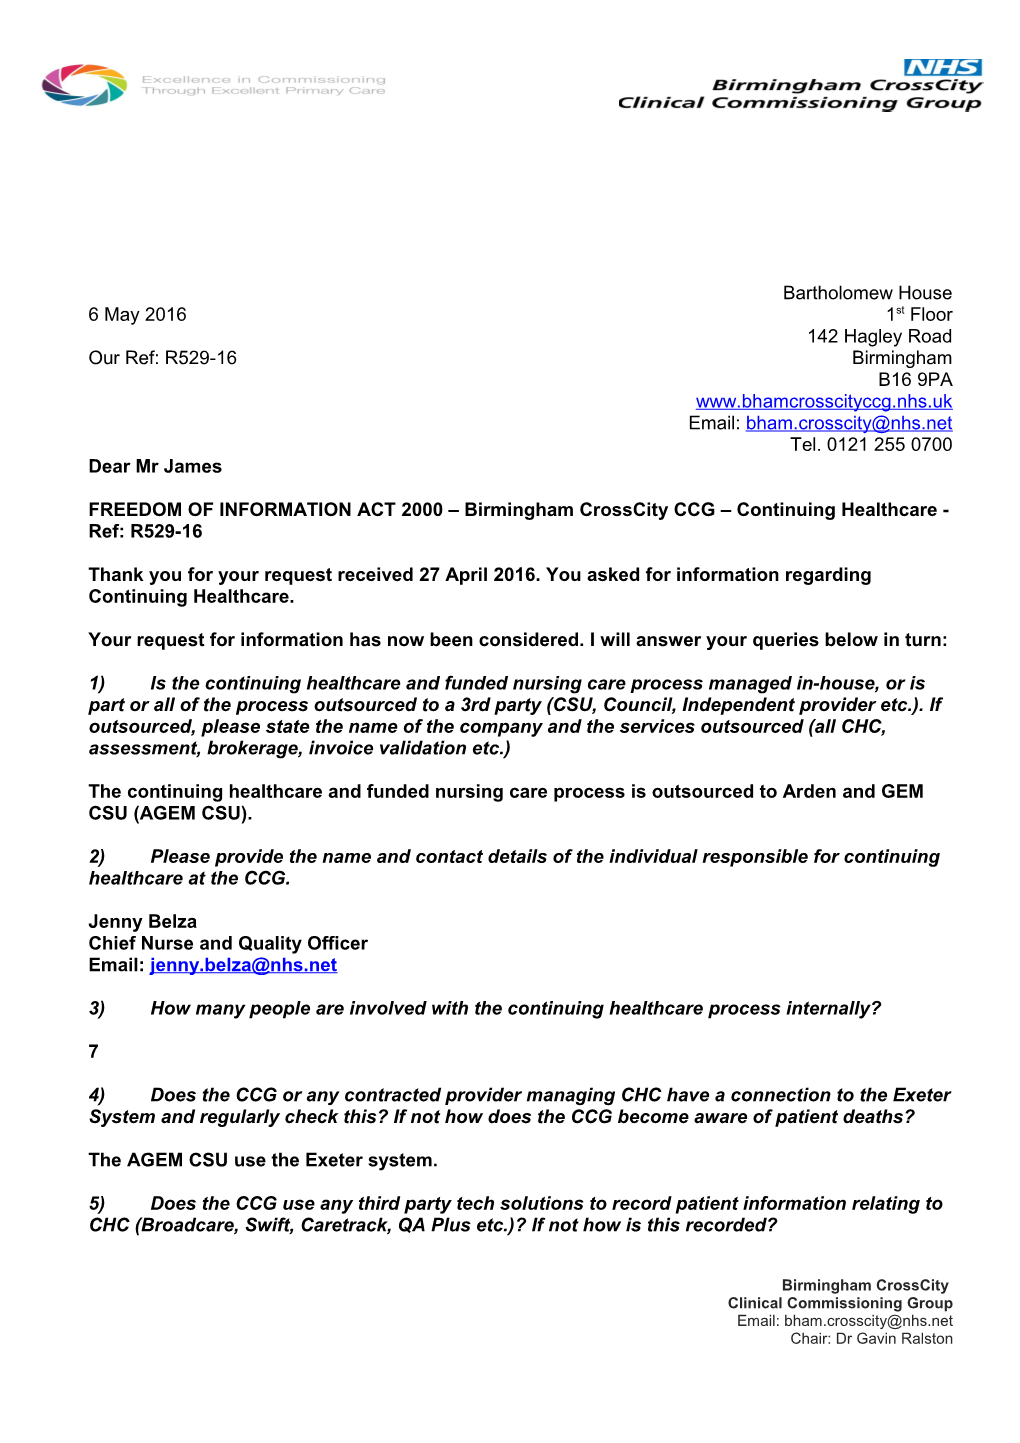 FREEDOM of INFORMATION ACT 2000 Birmingham Crosscity CCG Continuing Healthcare - Ref: R529-16